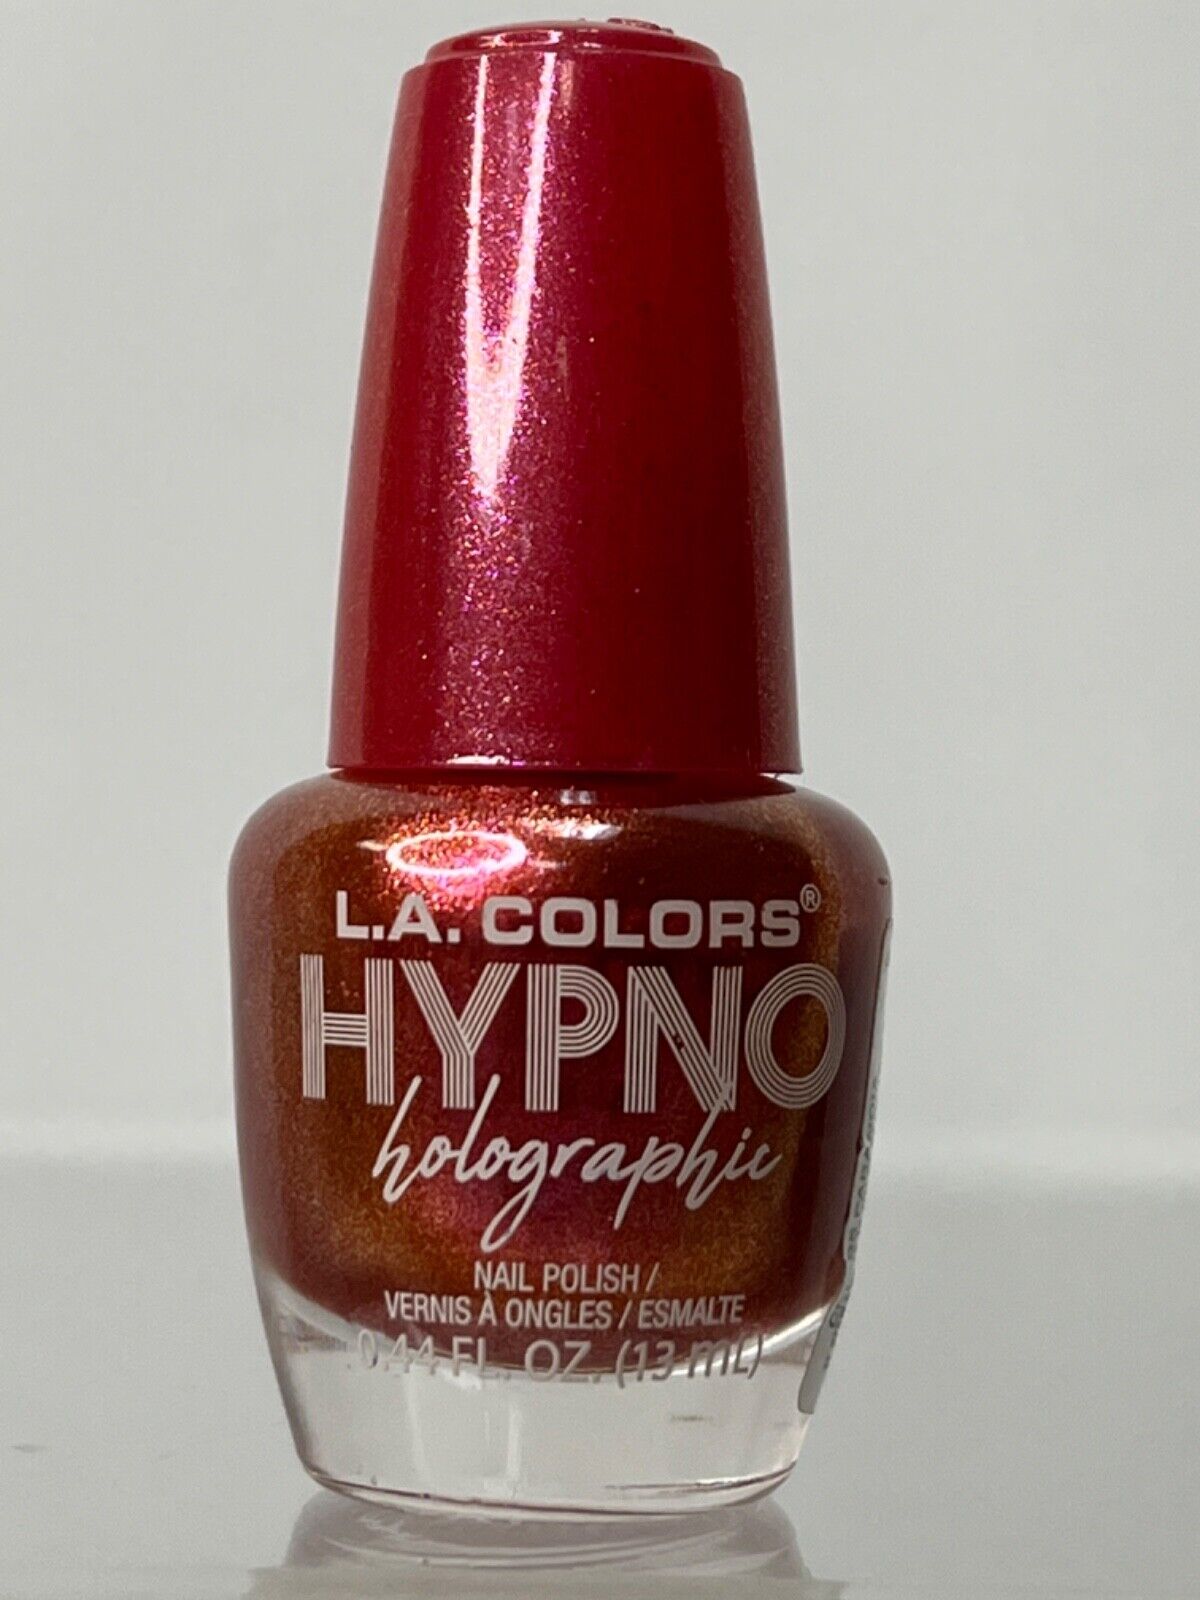 . Colors Colors hypno Holographic Nail polish CNL165 Paranoia | eBay